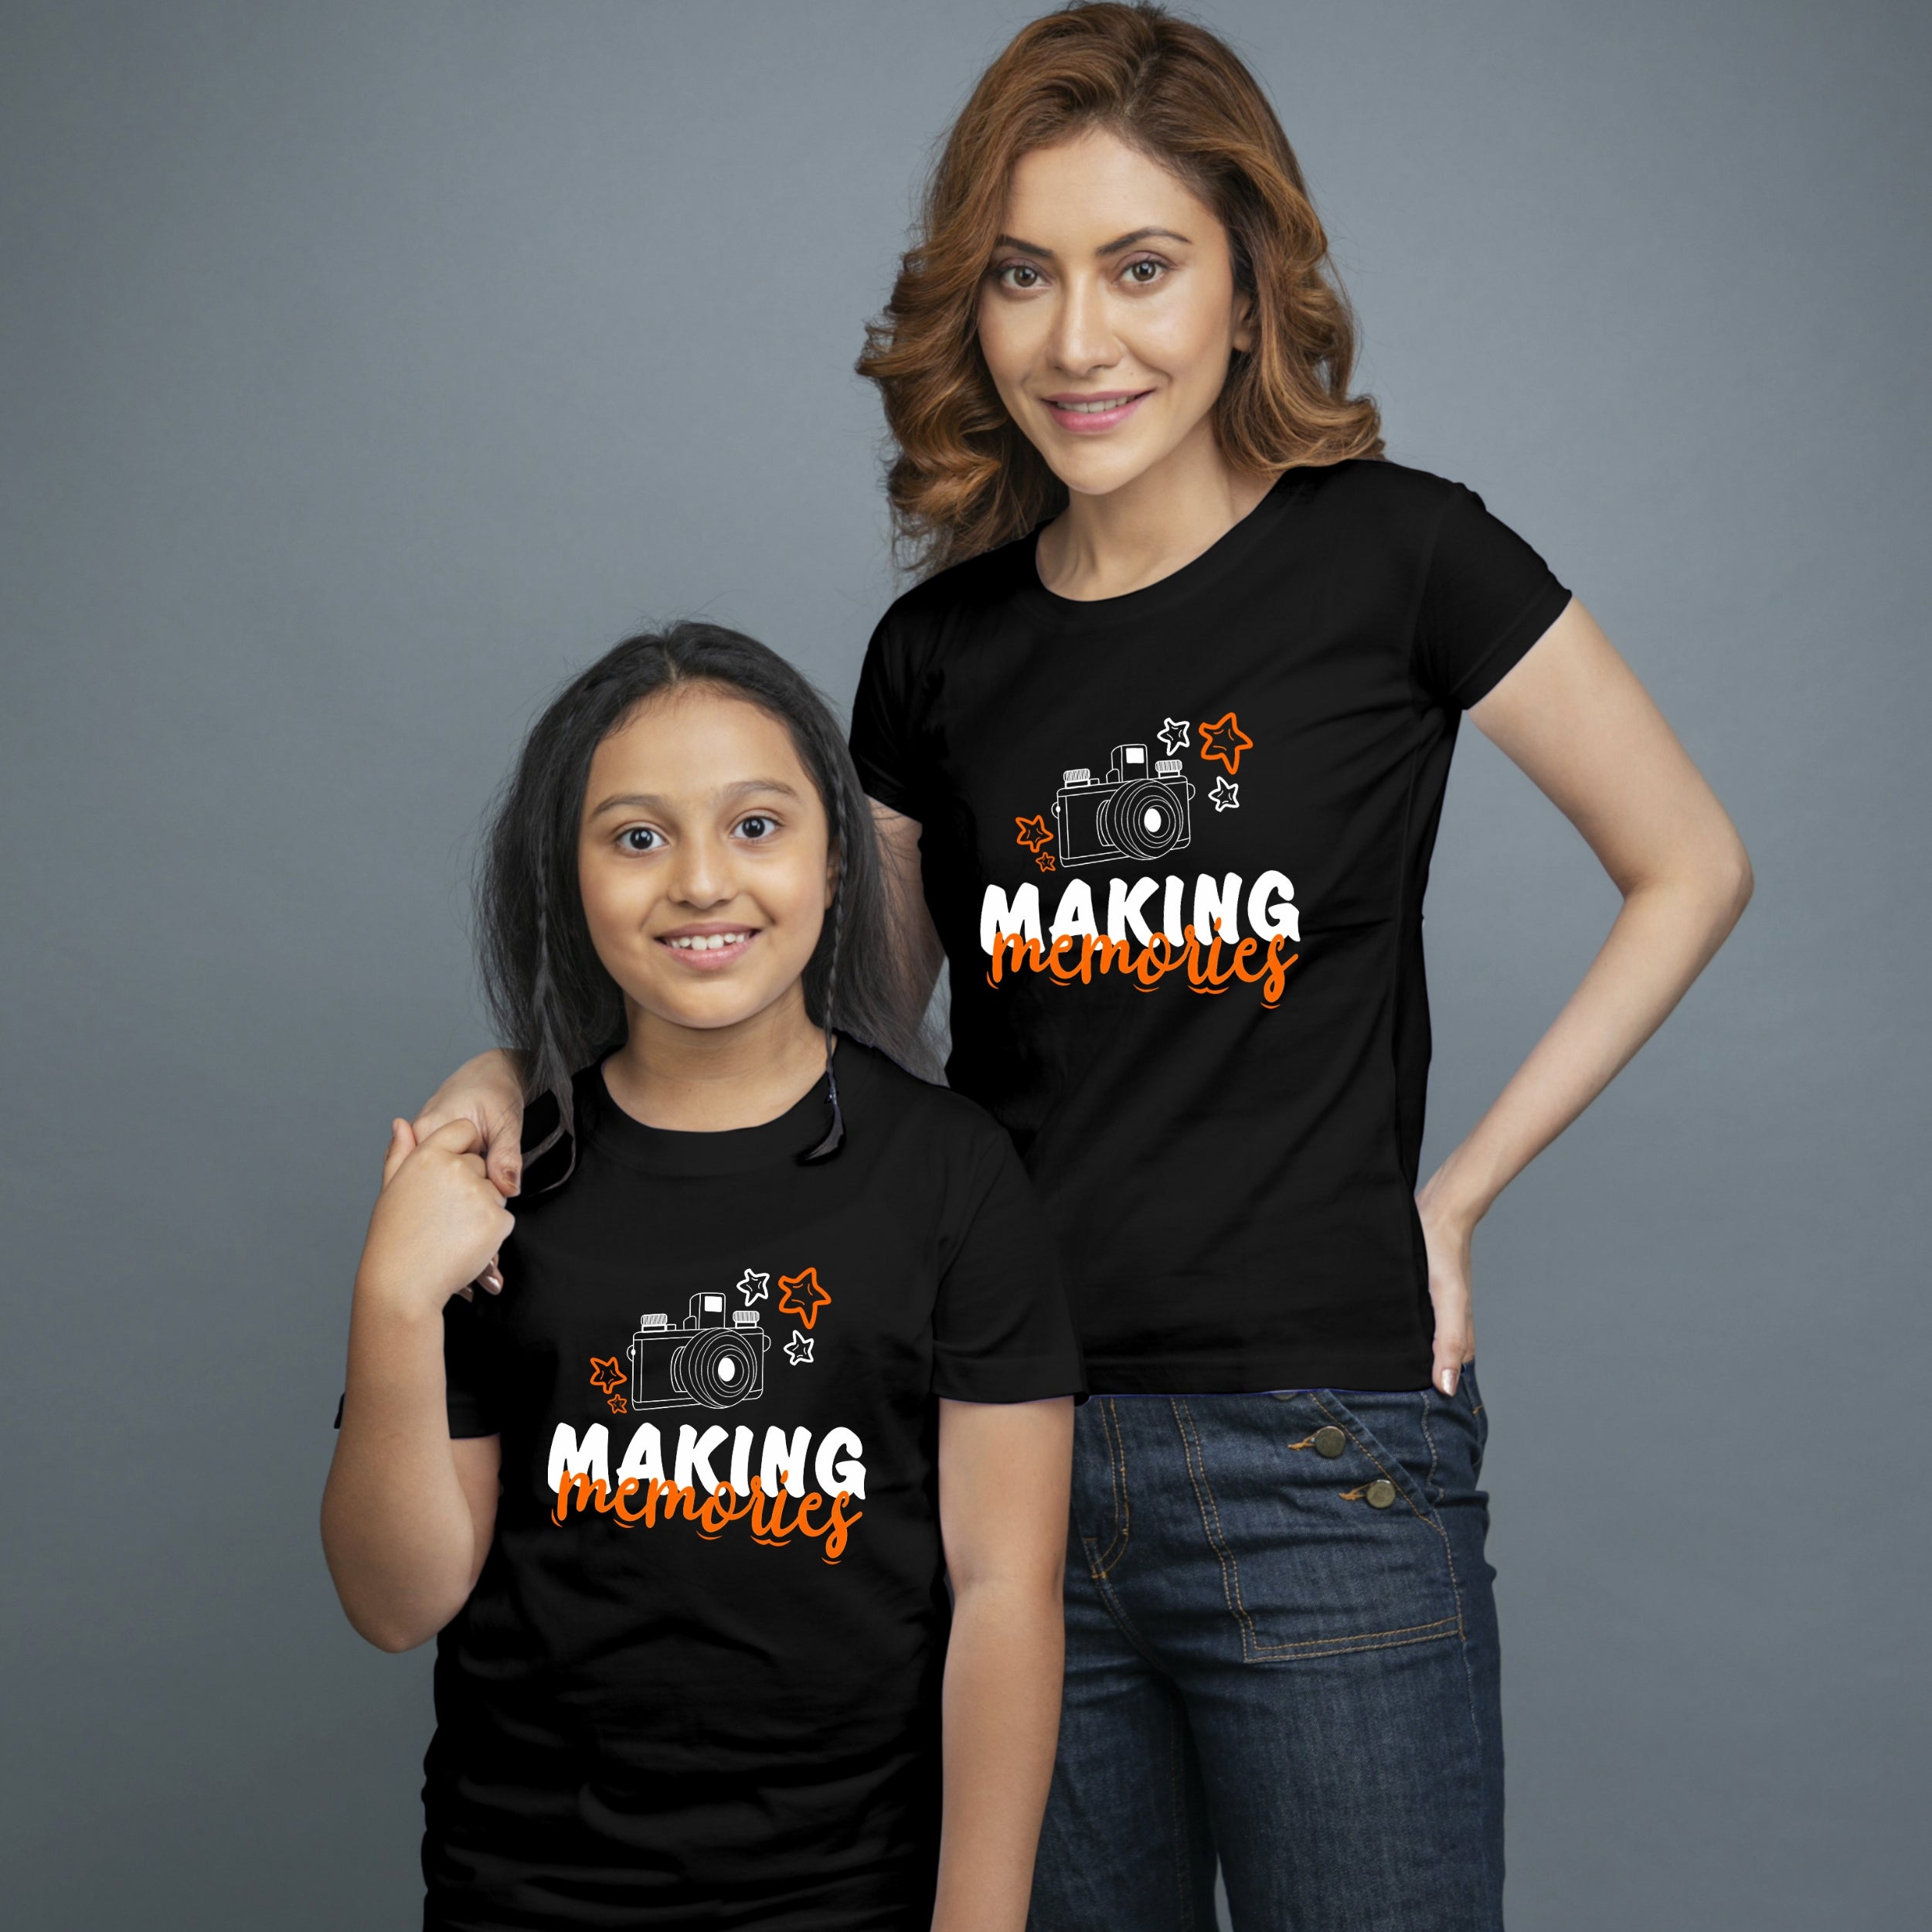 Family of 2 t shirt for Mom Daughter in Black Colour- Making Memories Variant